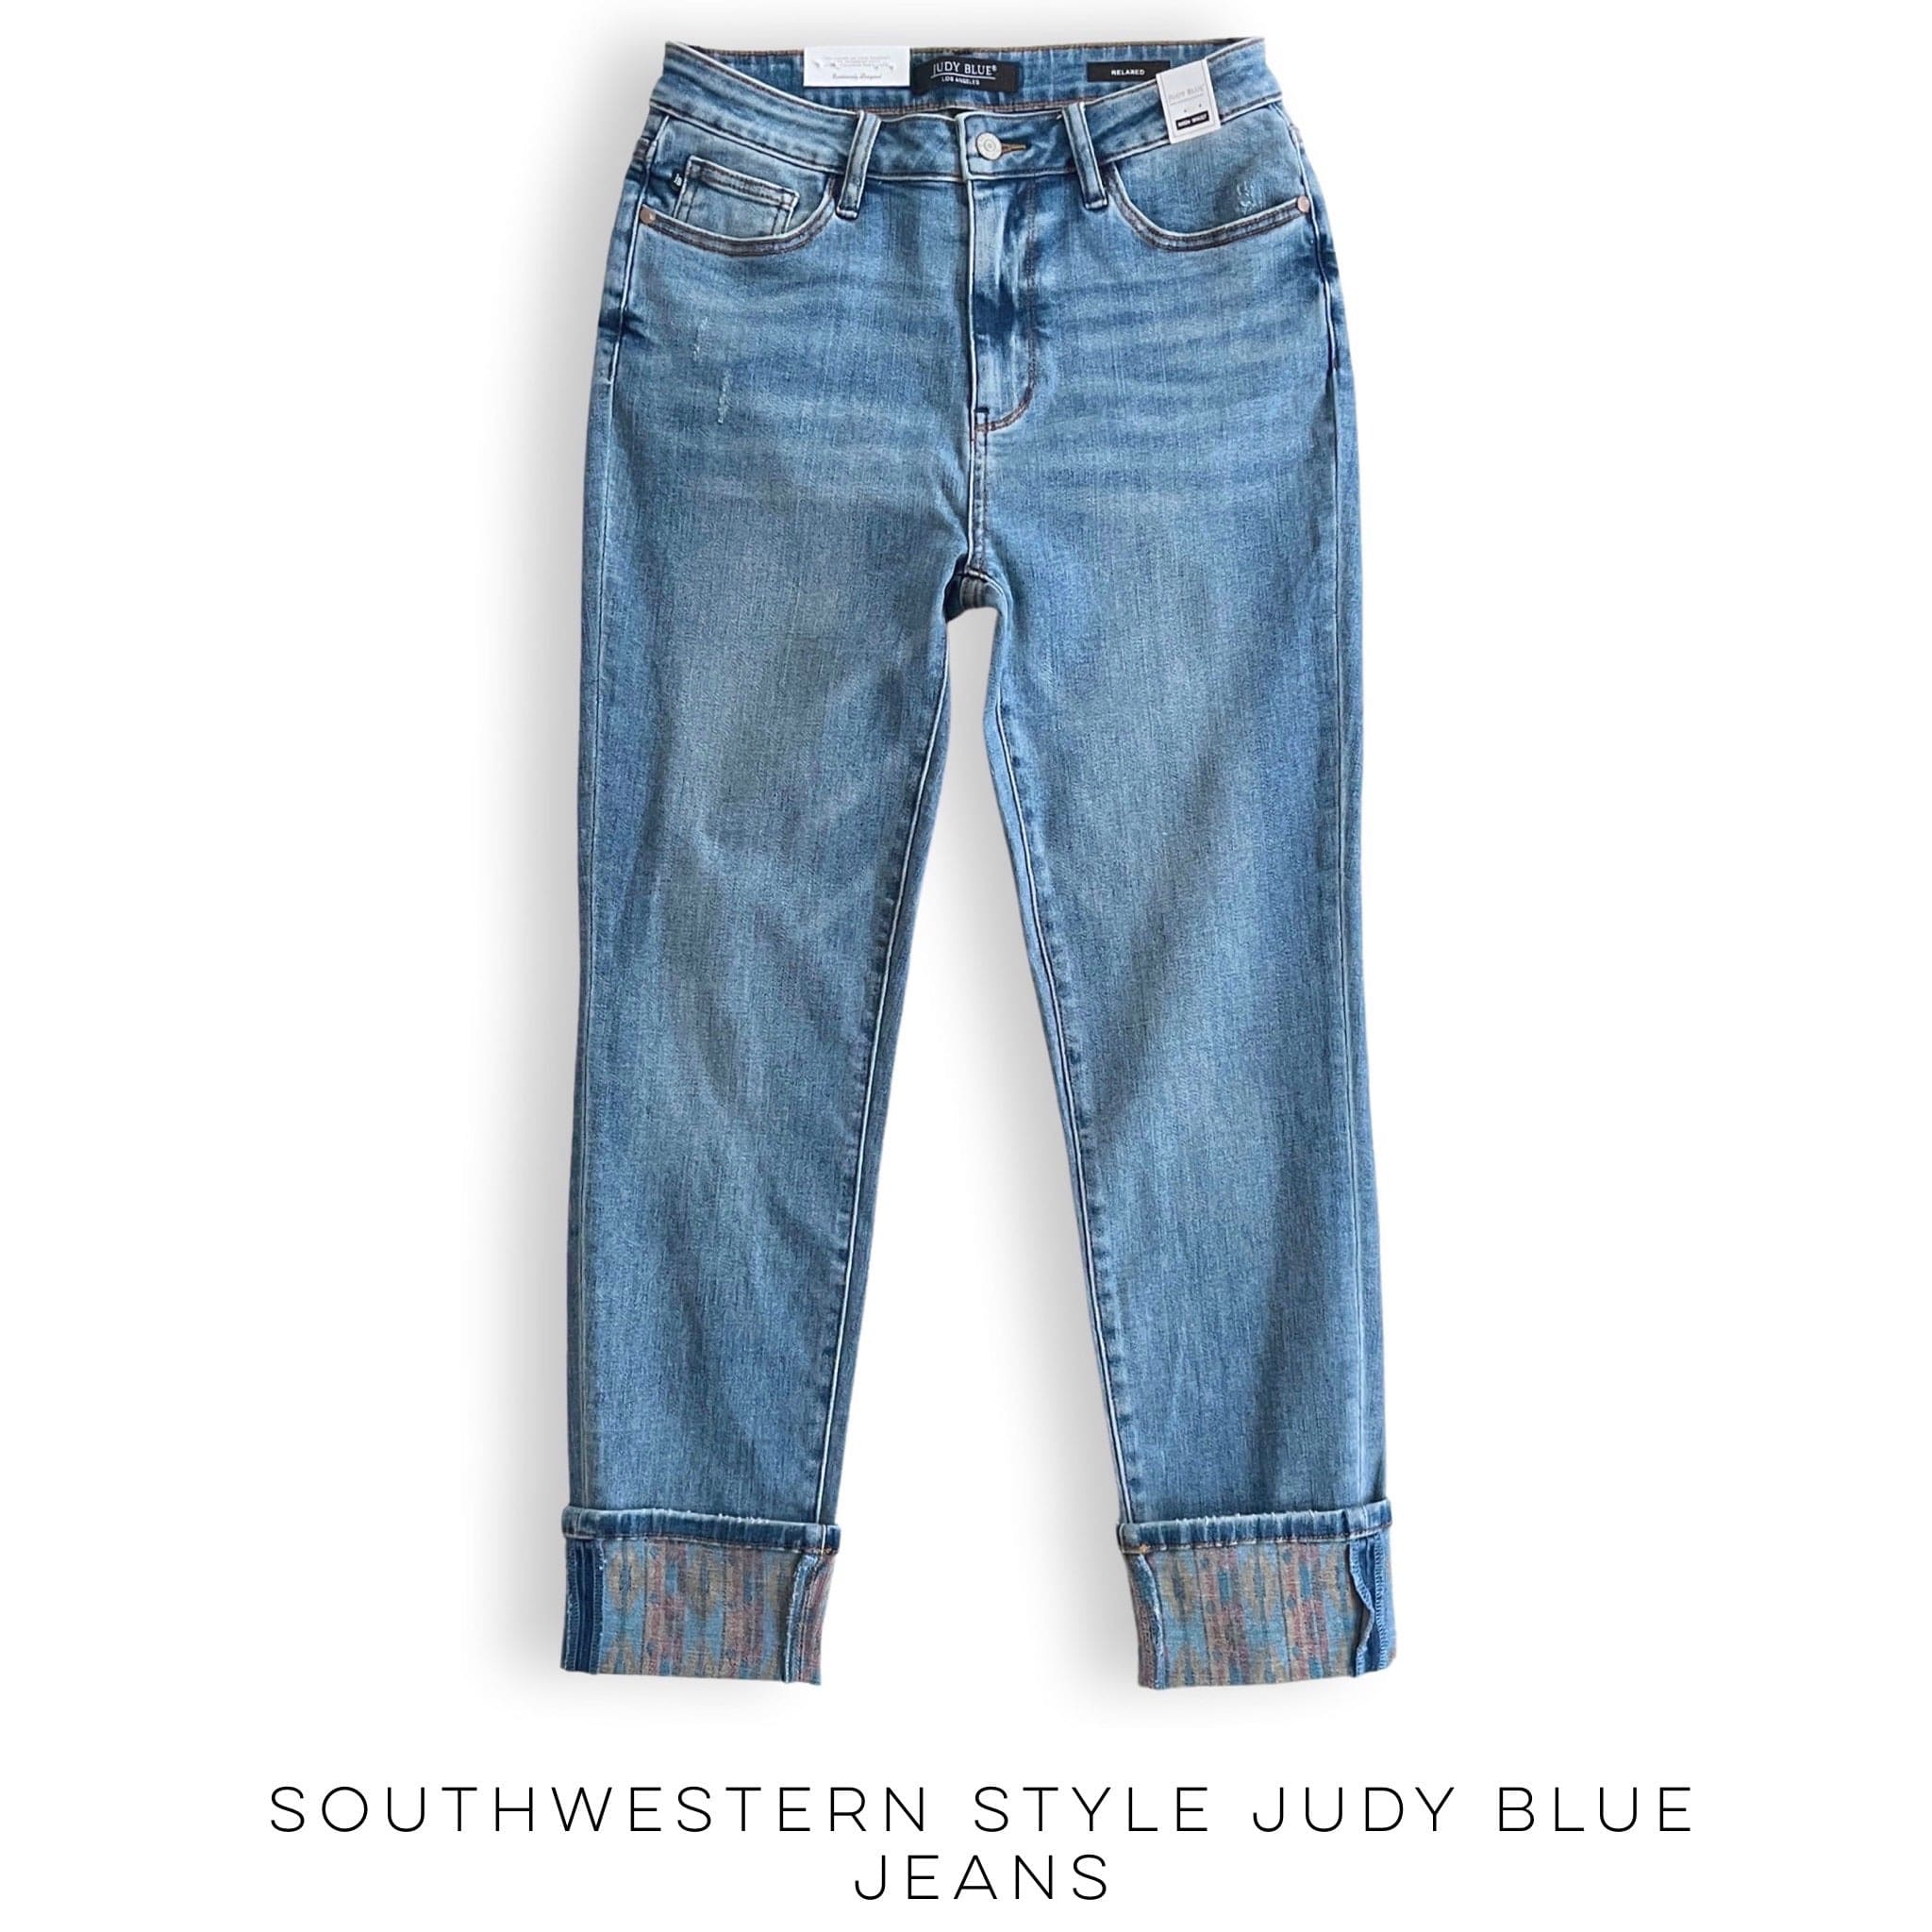 Southwestern Style Judy Blue Jeans-Judy Blue-Stay Foxy Boutique, Florissant, Missouri